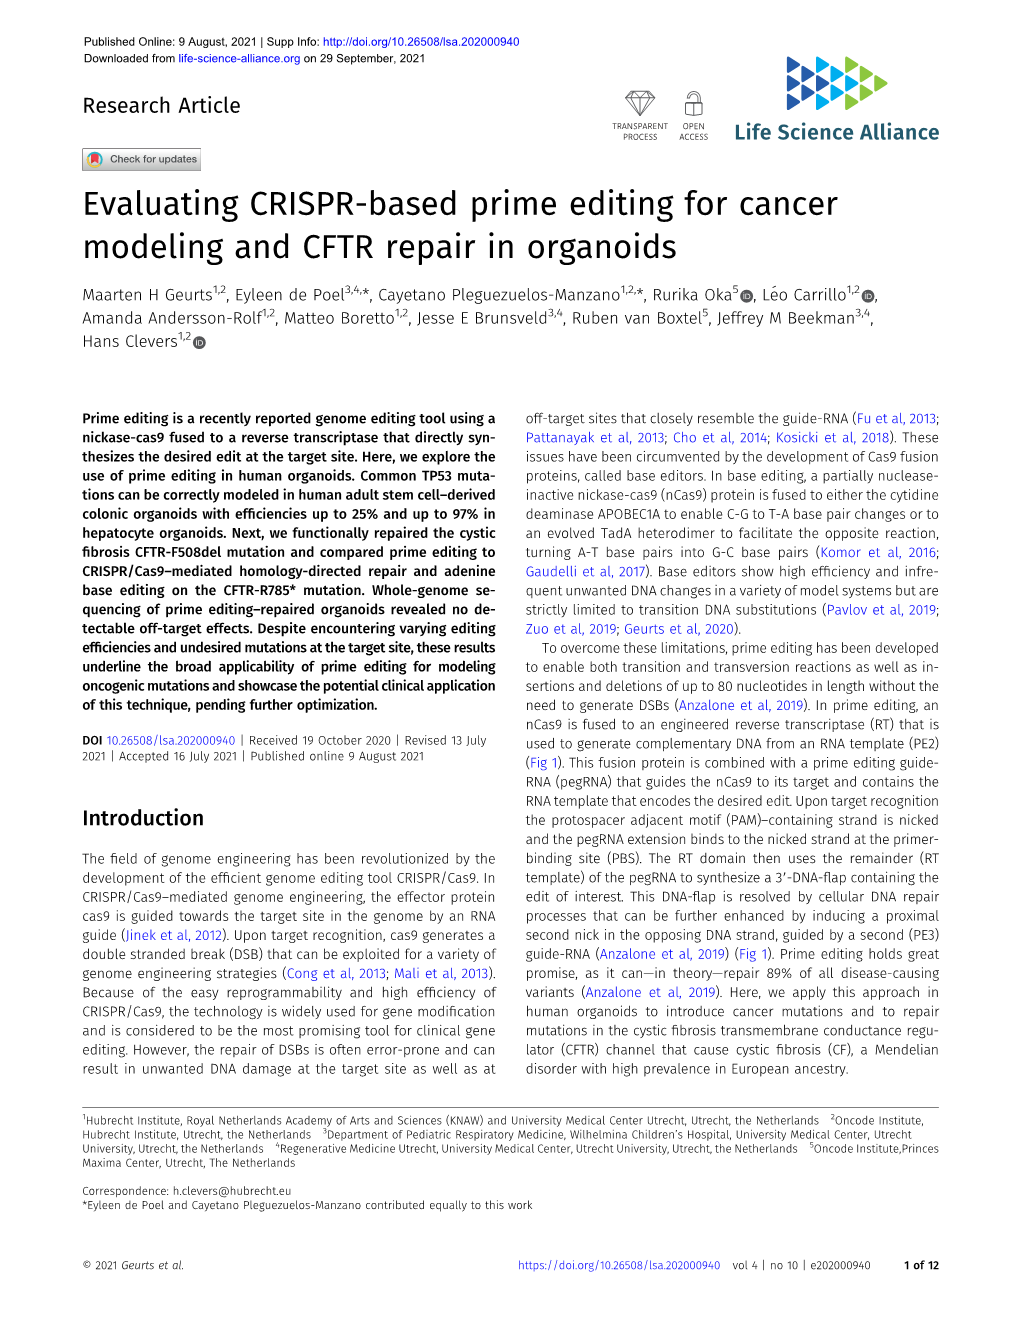 Evaluating CRISPR-Based Prime Editing for Cancer Modeling and CFTR Repair in Organoids